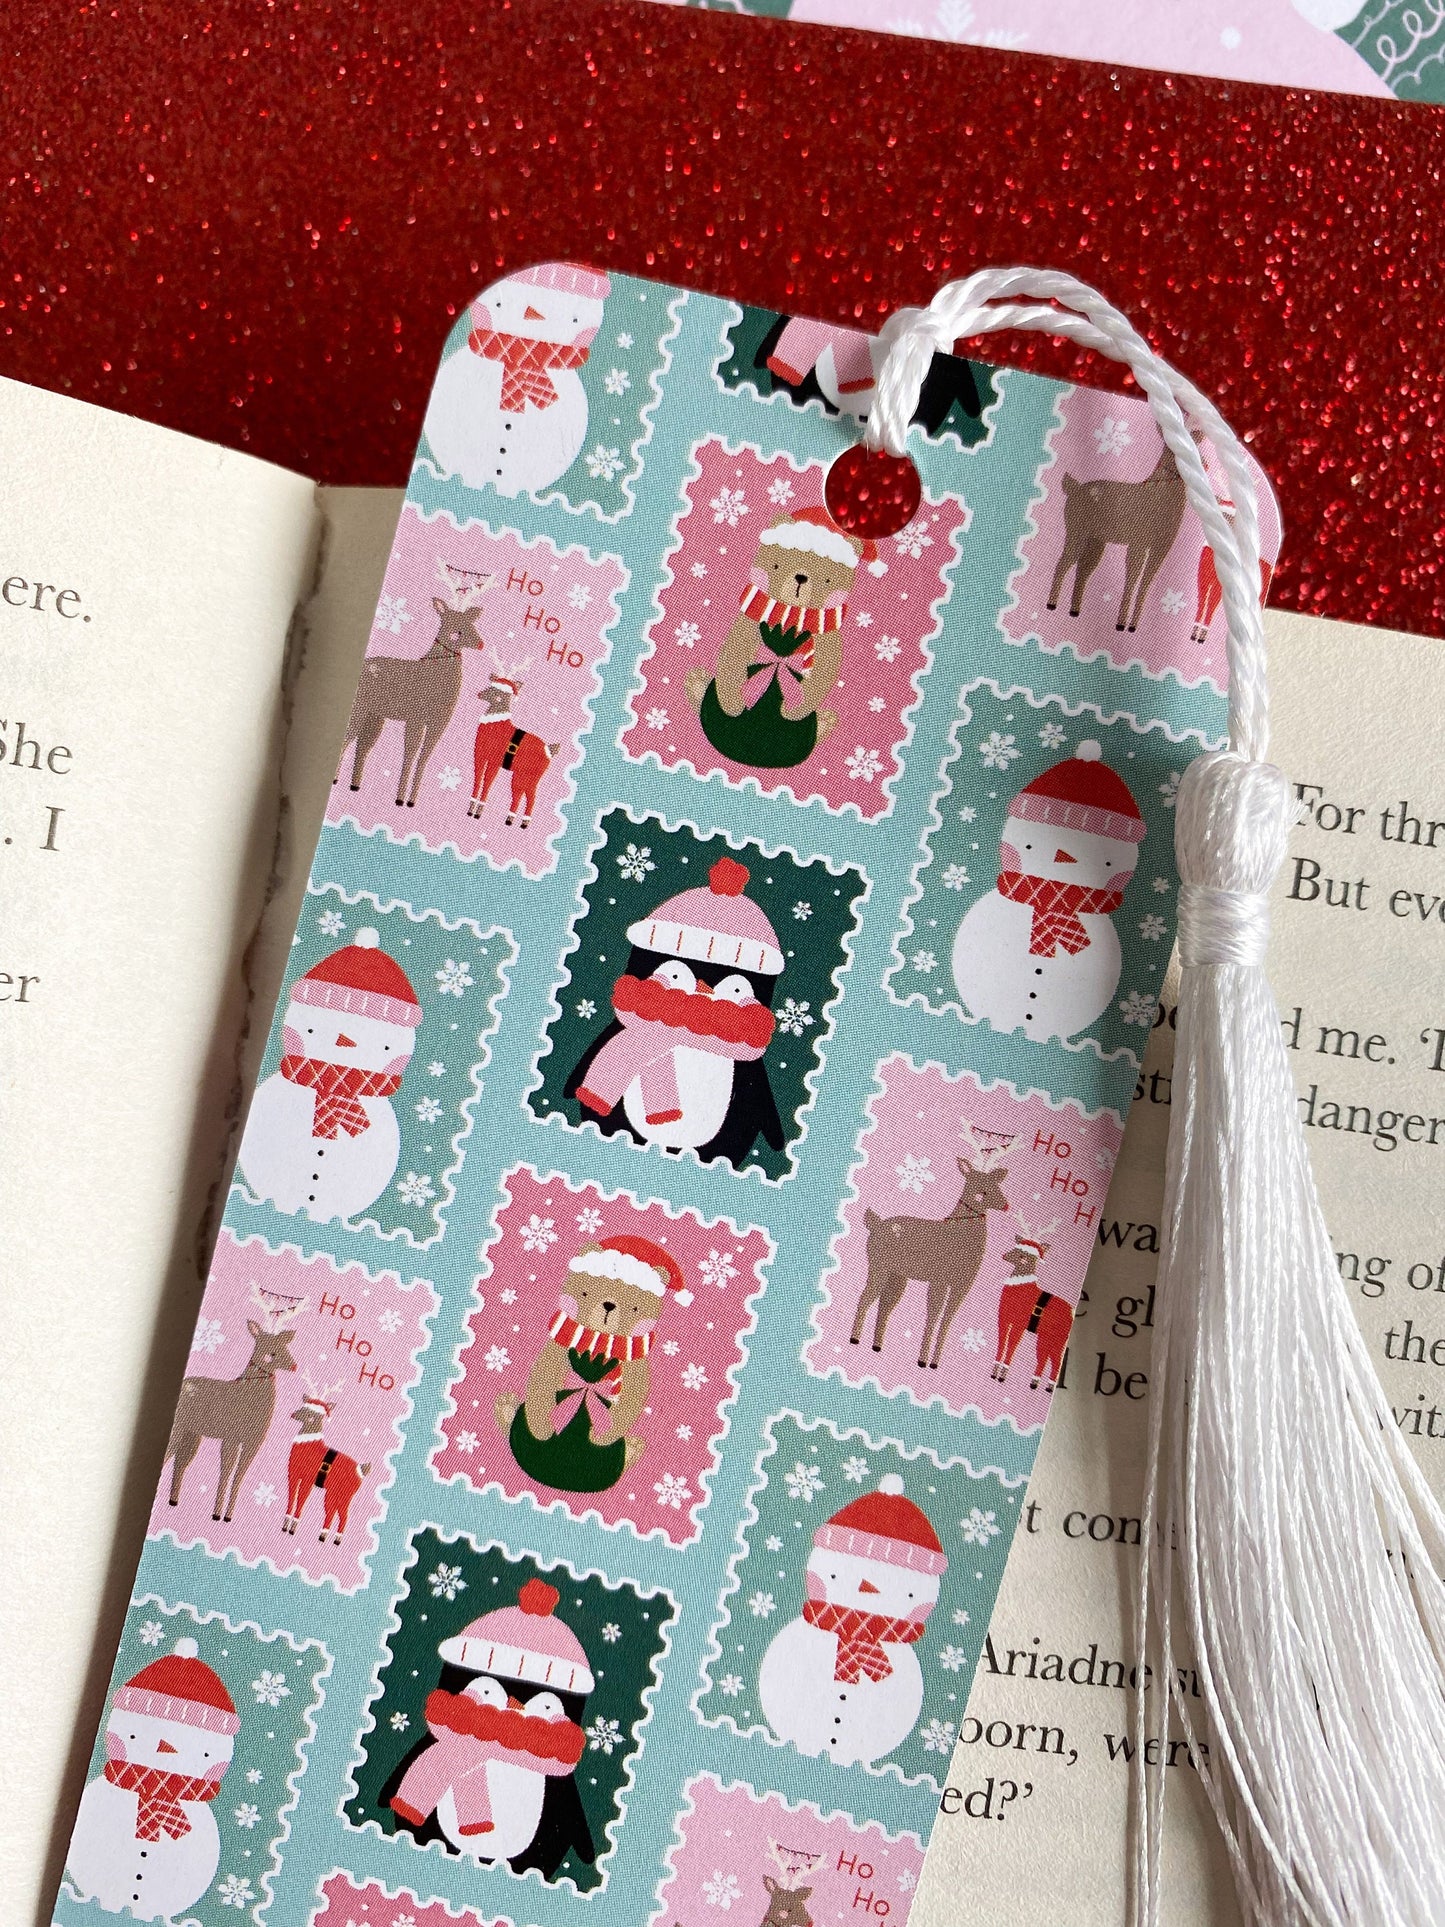 Festive Winter bookmark